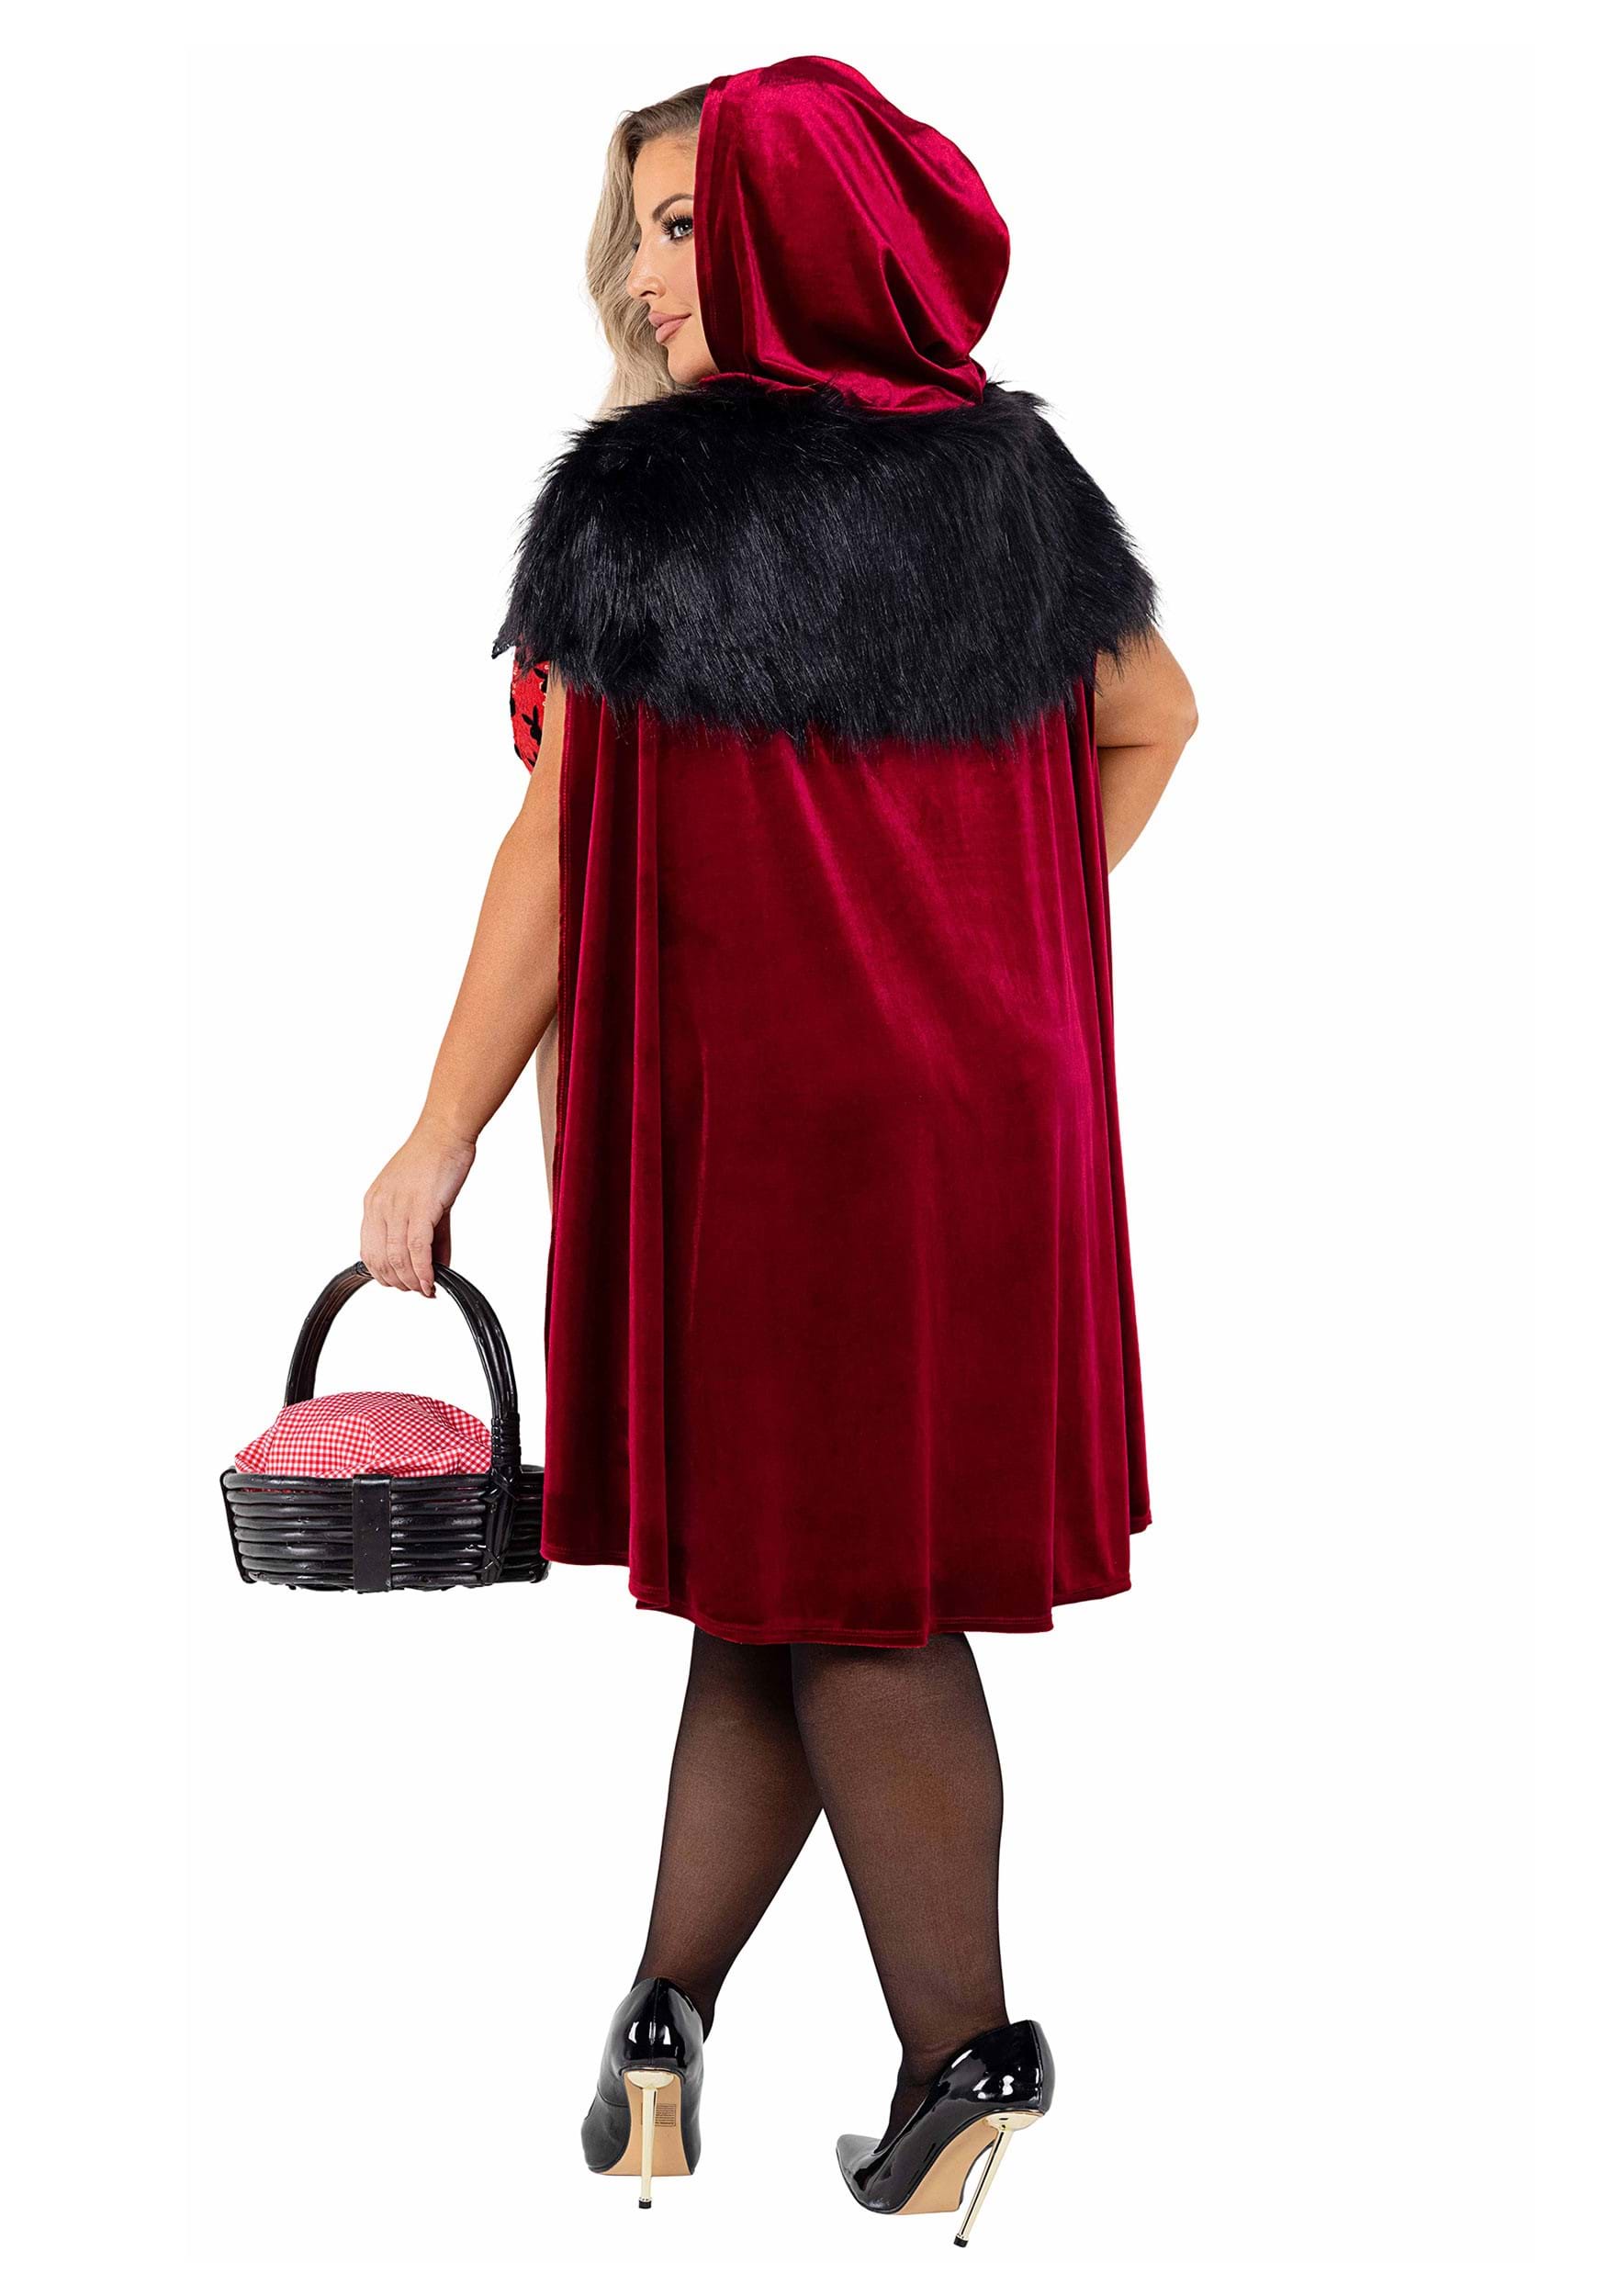 Women's Plus Size Playboy Red Riding Hood Fancy Dress Costume